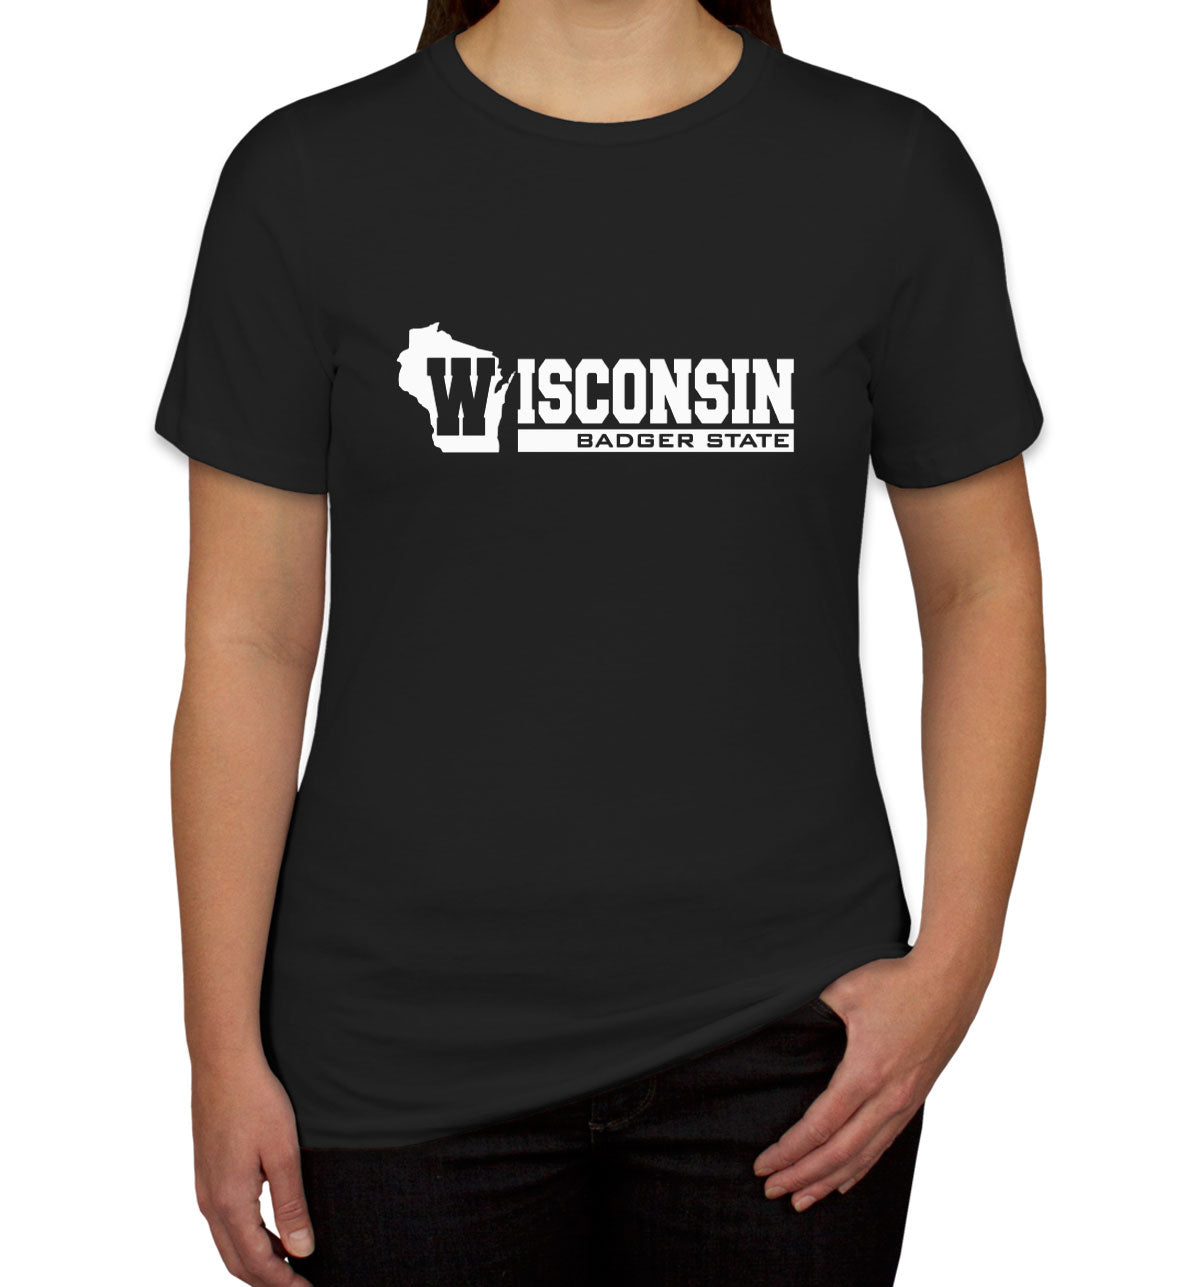 Wisconsin Badger State Women's T-shirt